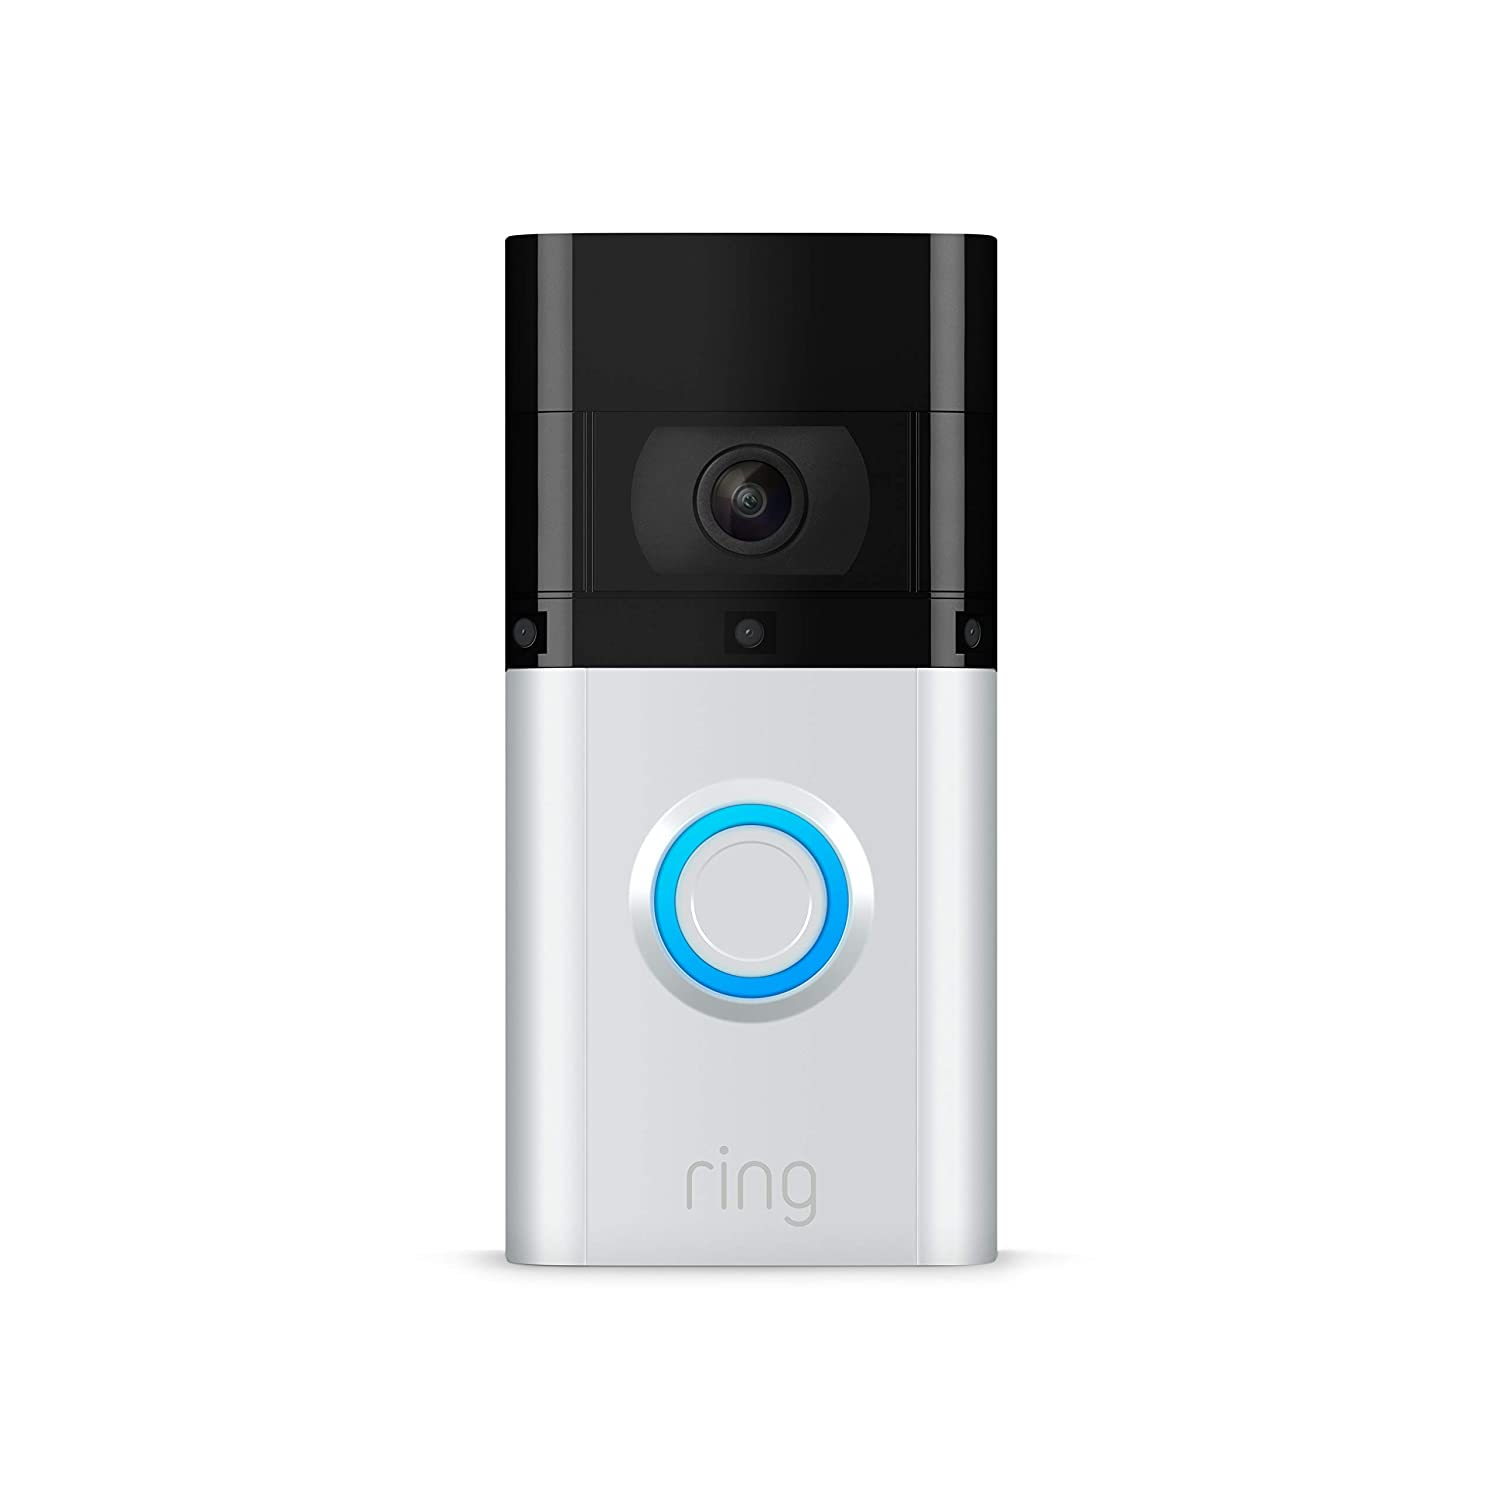 Ring Video Doorbell 3 Plus B07WLP395R